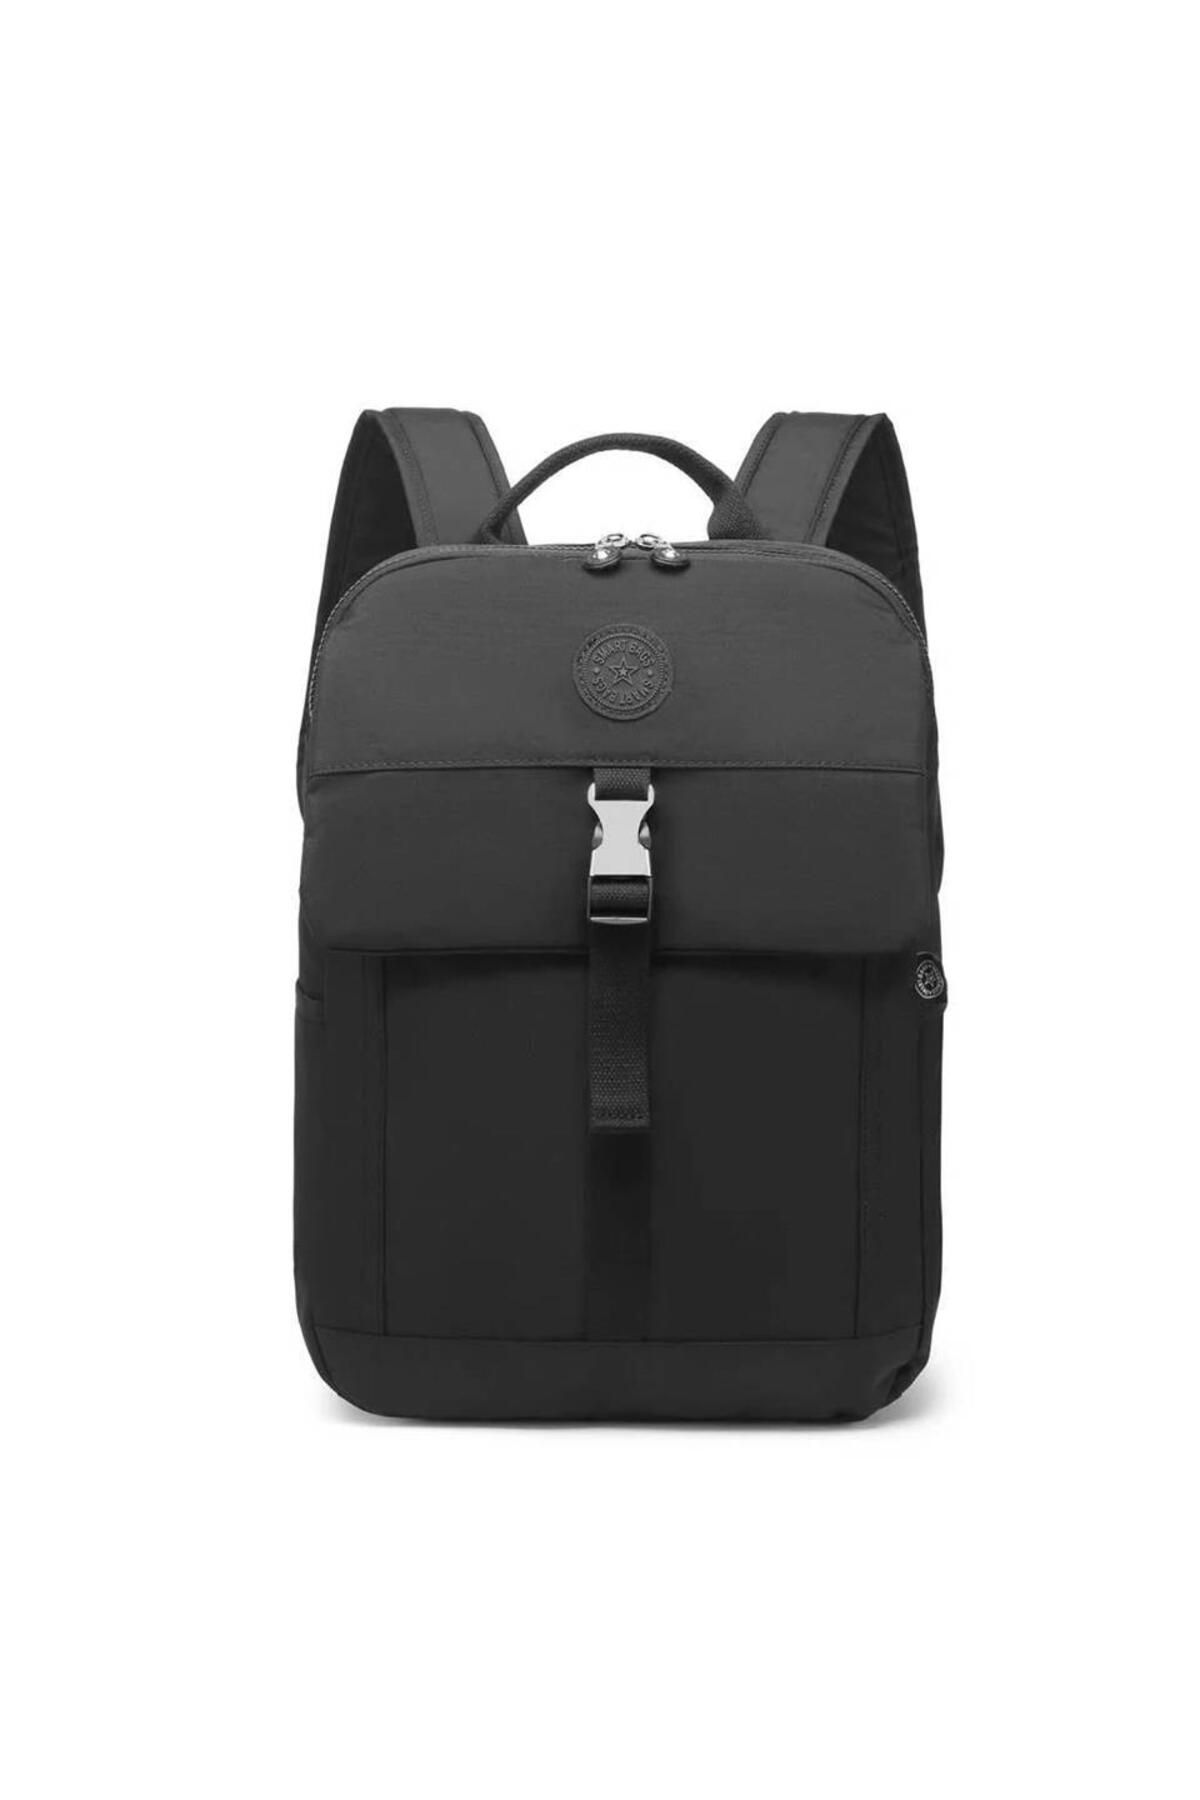 Smart Bags 3183 Sırt Çantası Siyah